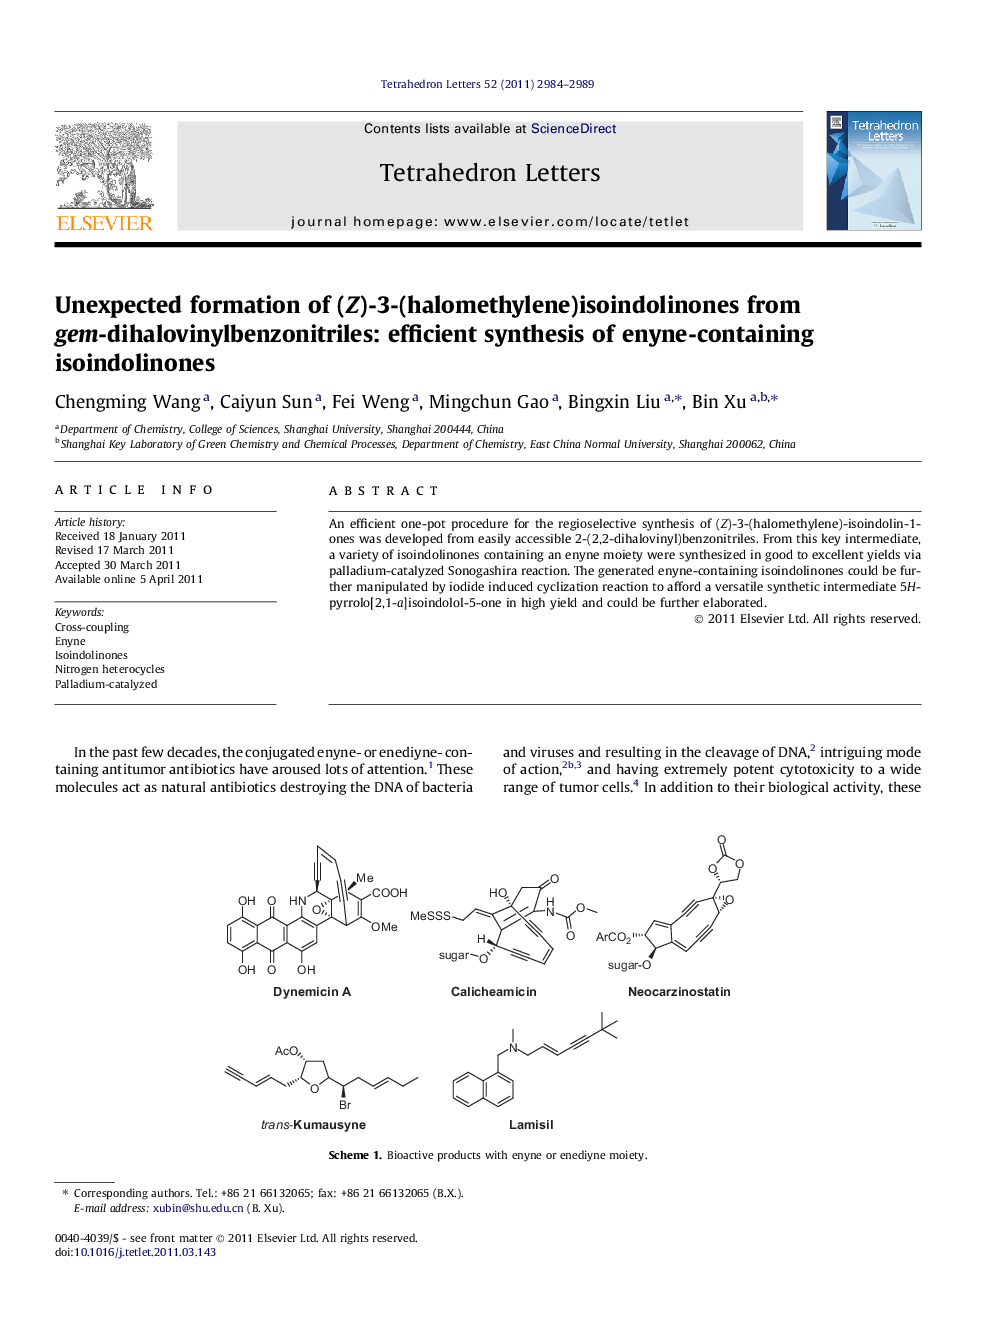 Unexpected formation of (Z)-3-(halomethylene)isoindolinones from gem-dihalovinylbenzonitriles: efficient synthesis of enyne-containing isoindolinones